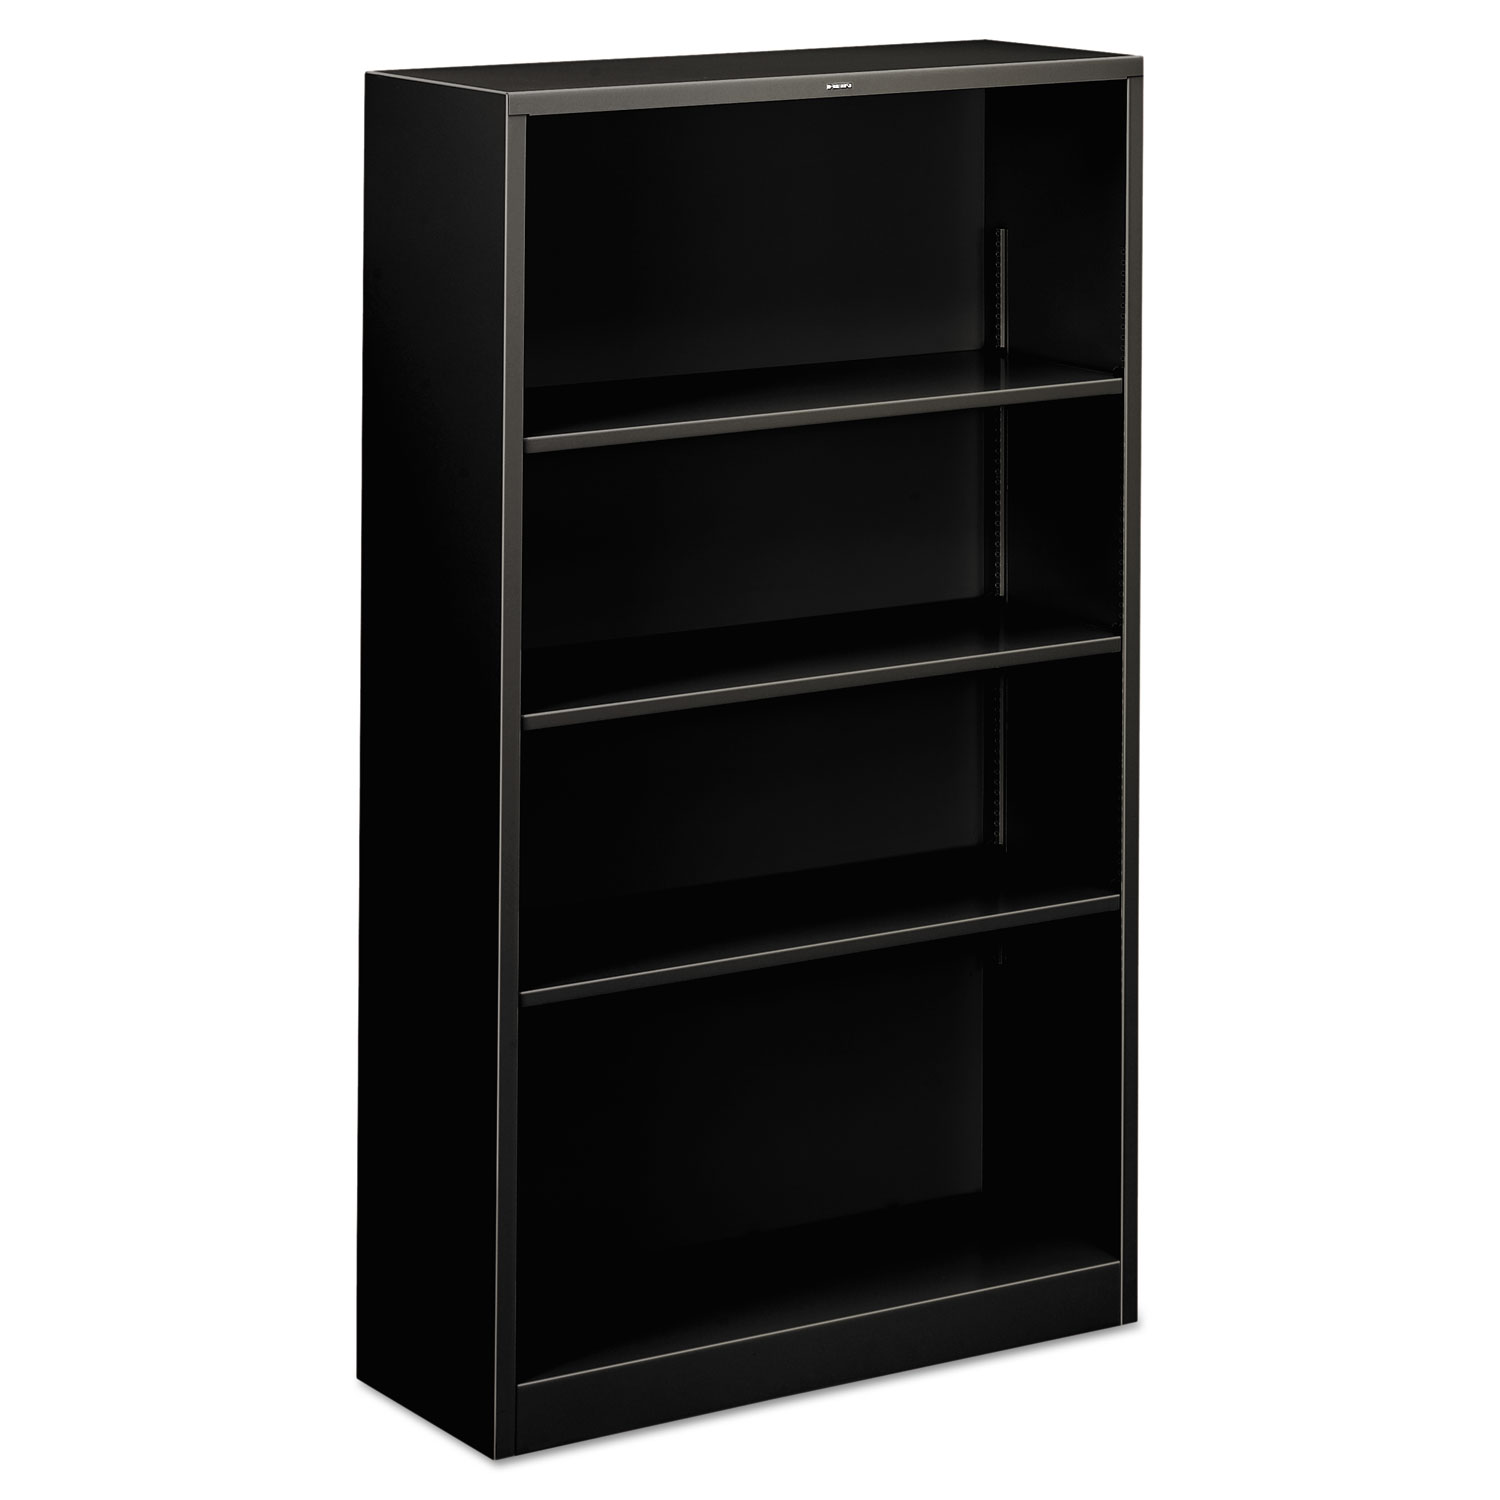  HON HS60ABC.P Metal Bookcase, Four-Shelf, 34-1/2w x 12-5/8d x 59h, Black (HONS60ABCP) 